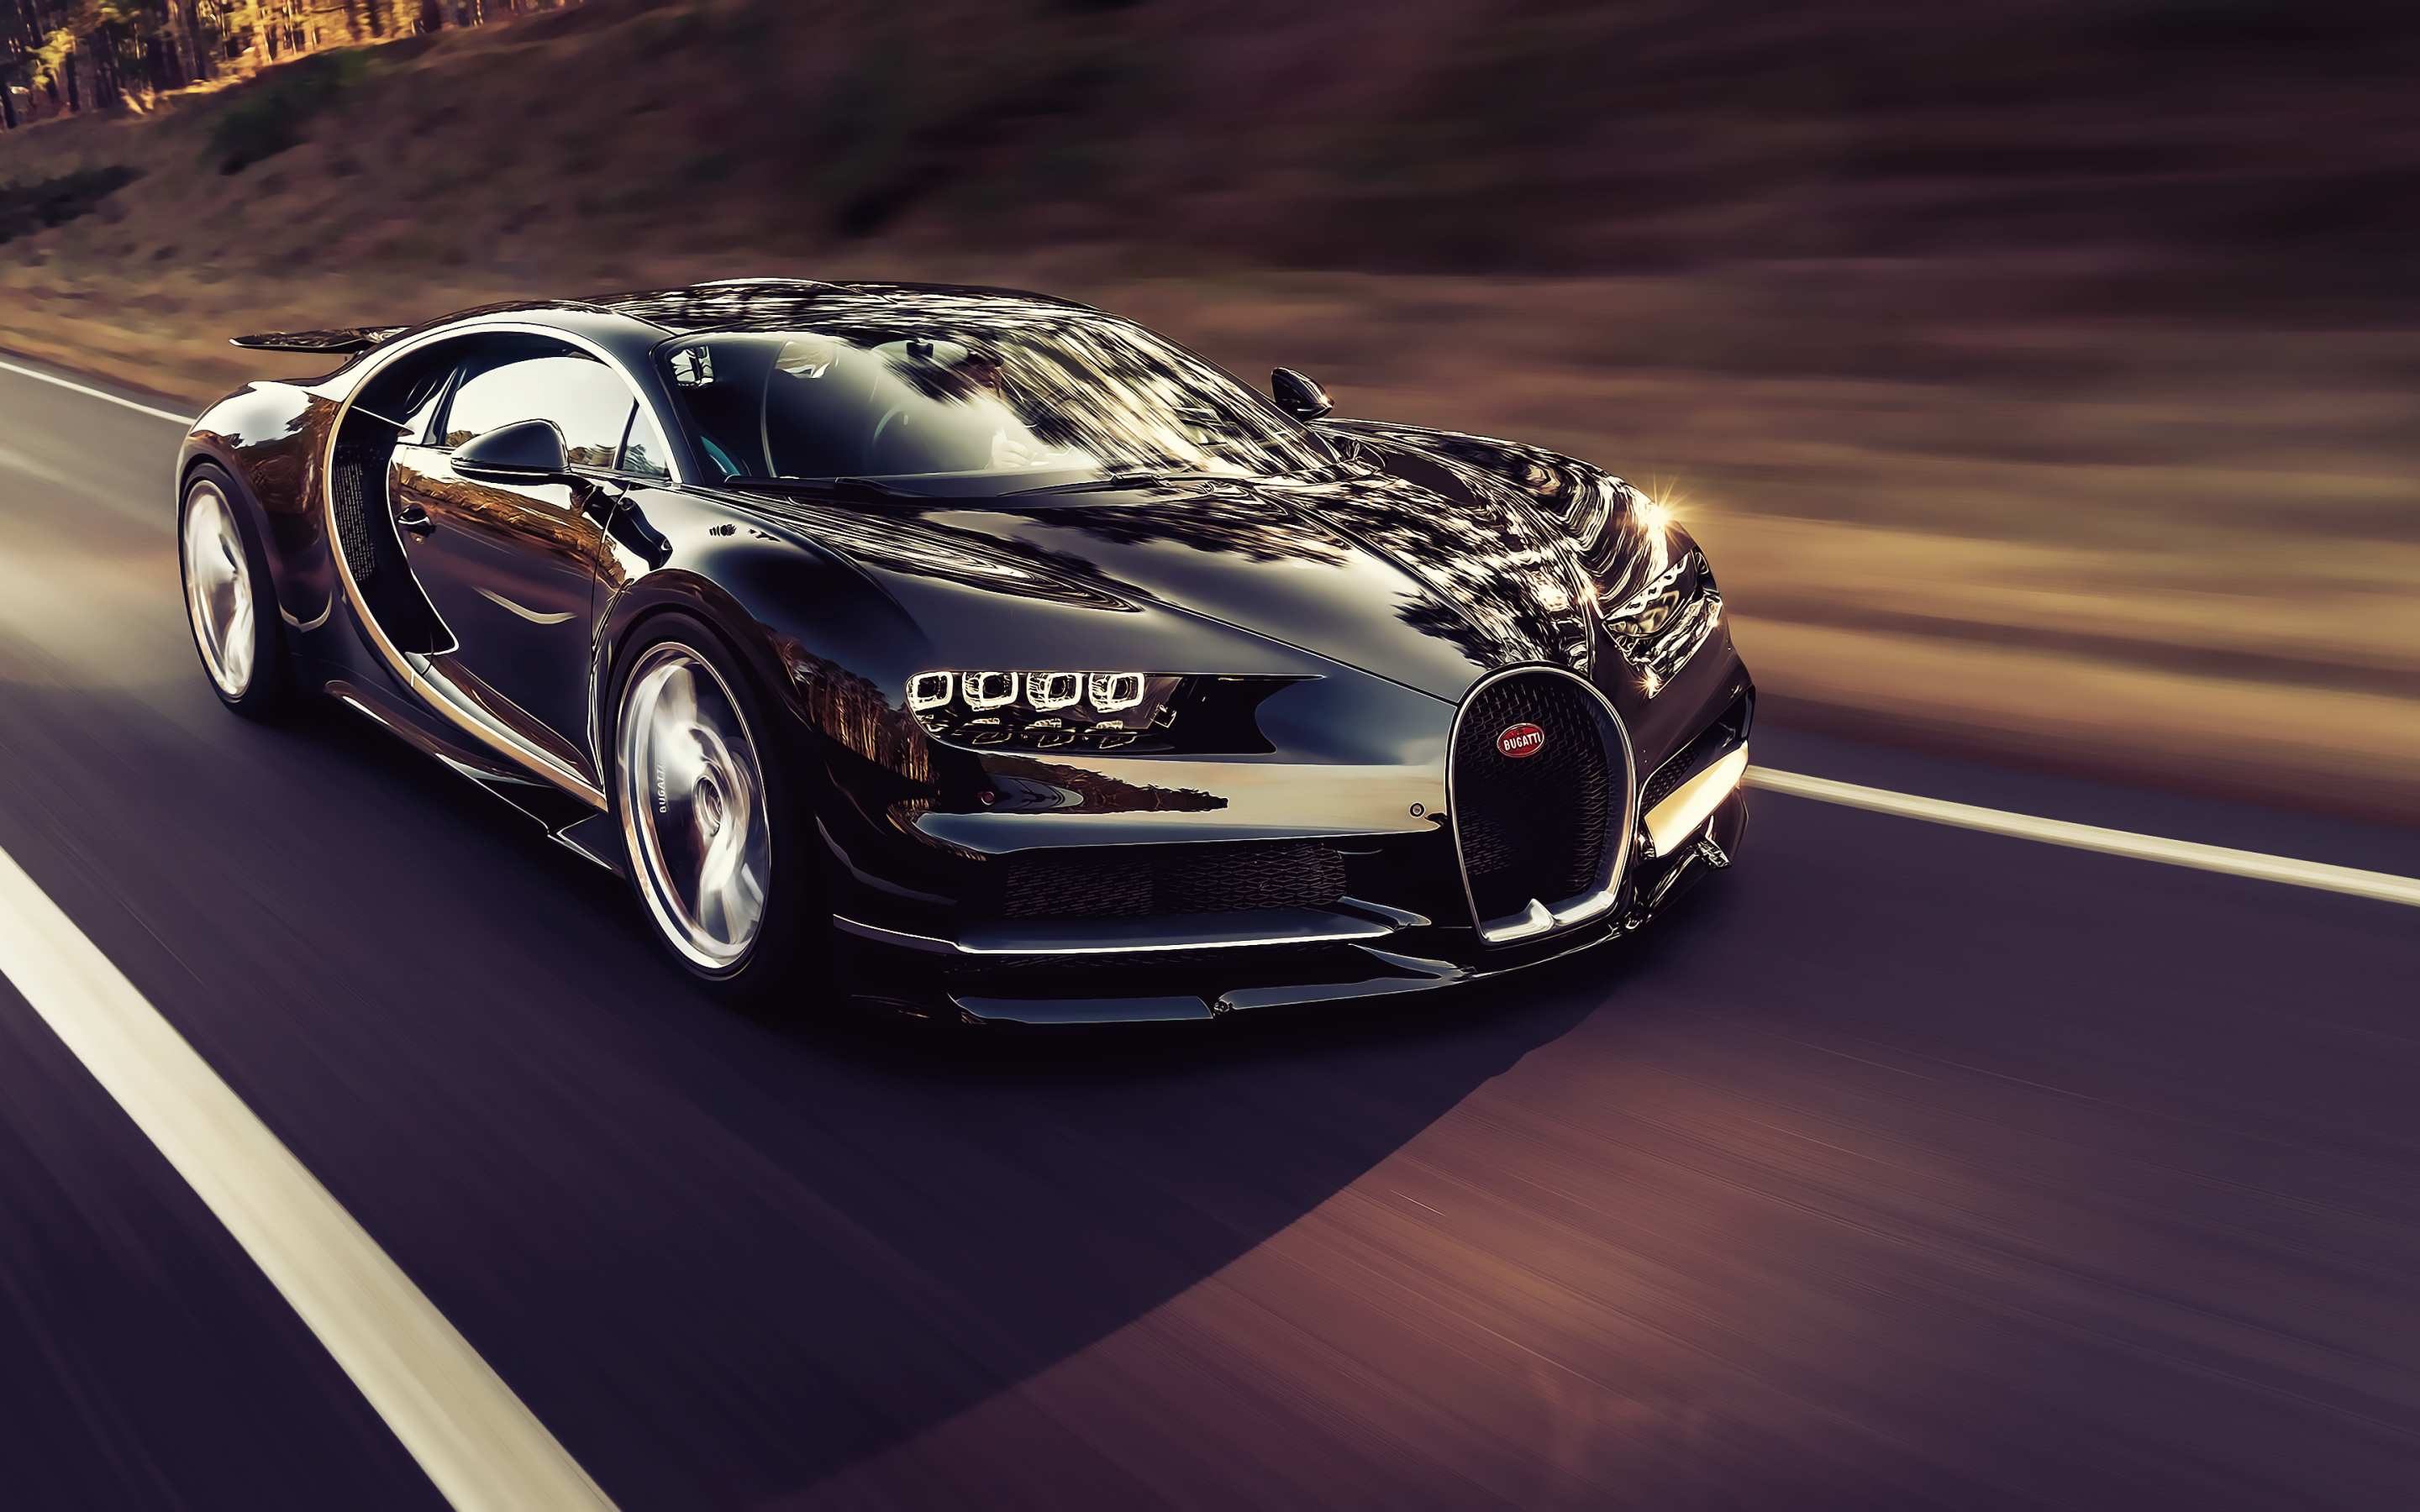 Luxury car, bugatti chiron, on road, 2880x1800 wallpaper